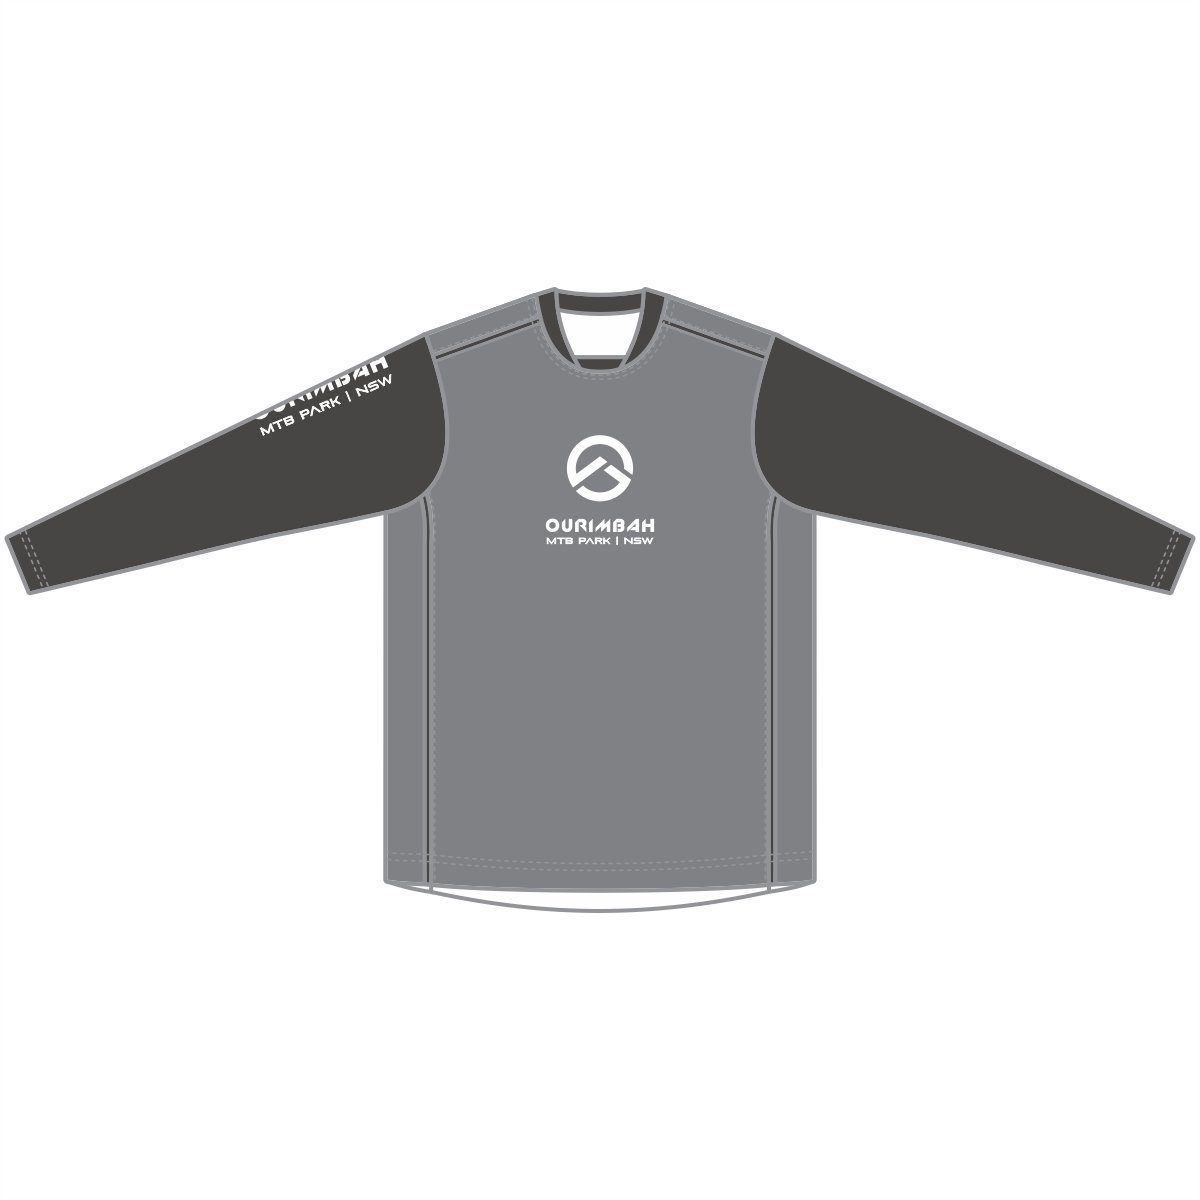 black long sleeve cycling jersey